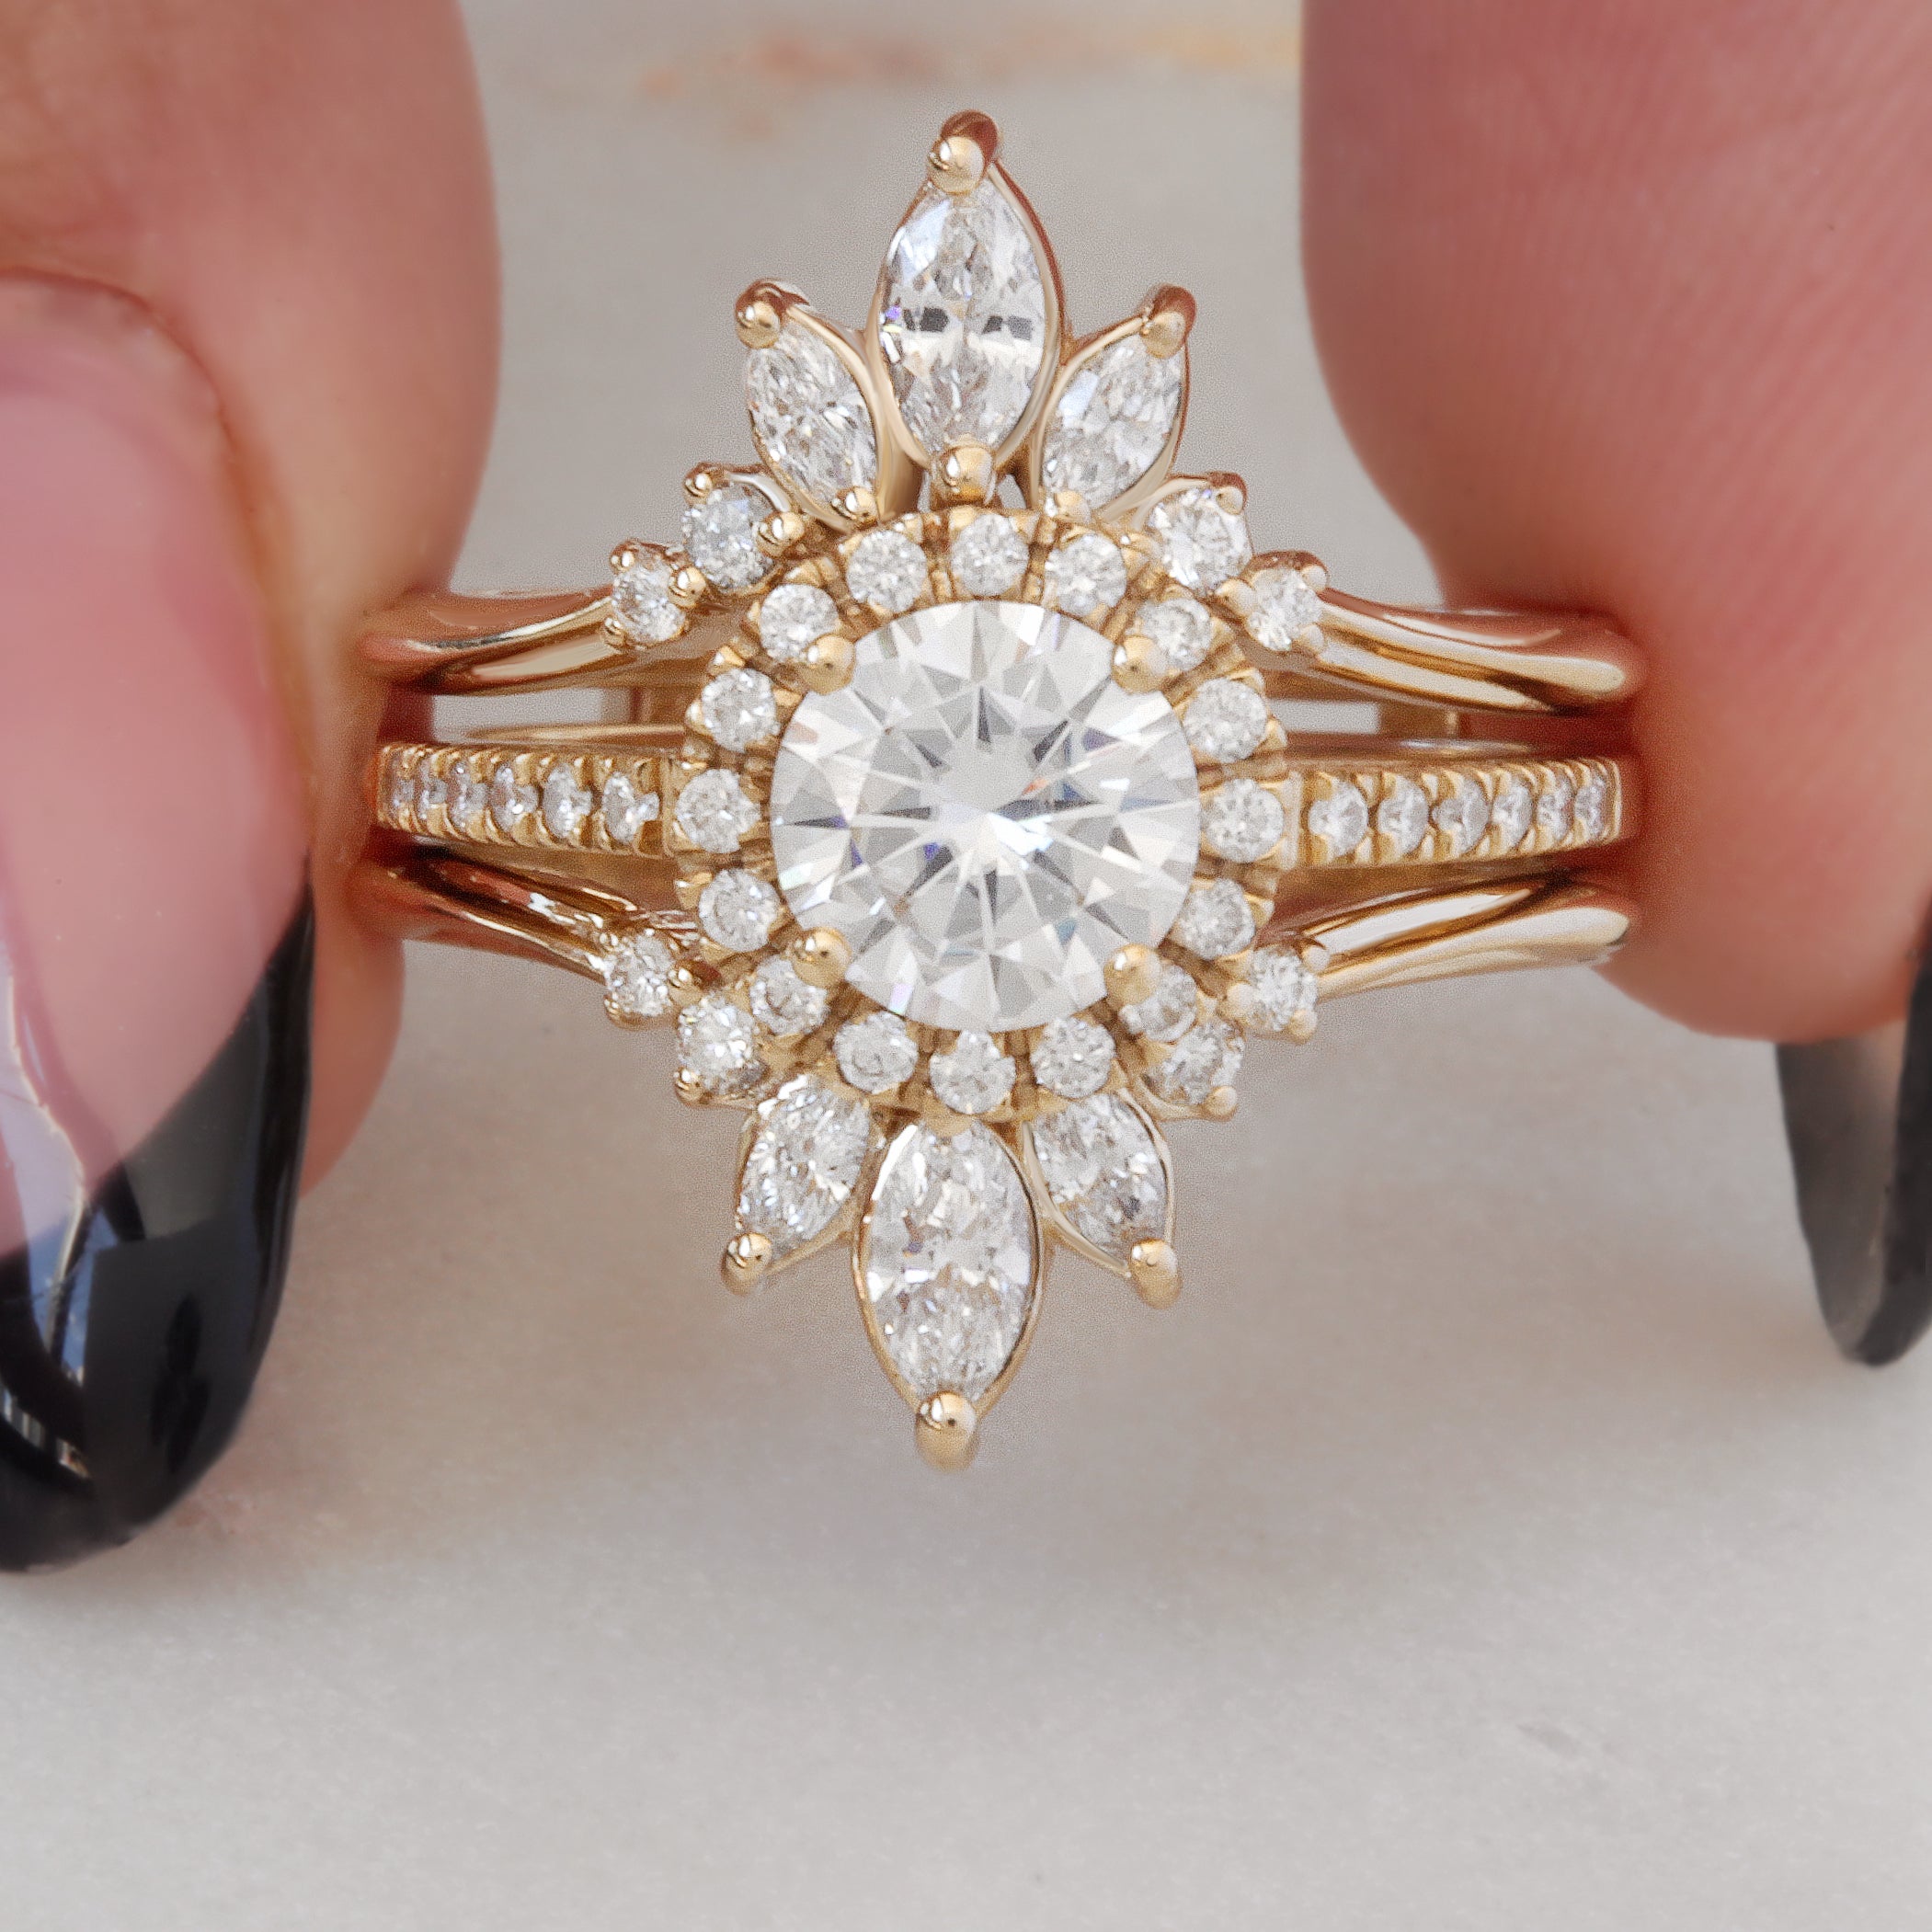 Round diamond halo engagement ring "Lady" & Diamond Ring Guard Enhancer "Danielle" - Bridal Two Ring Set